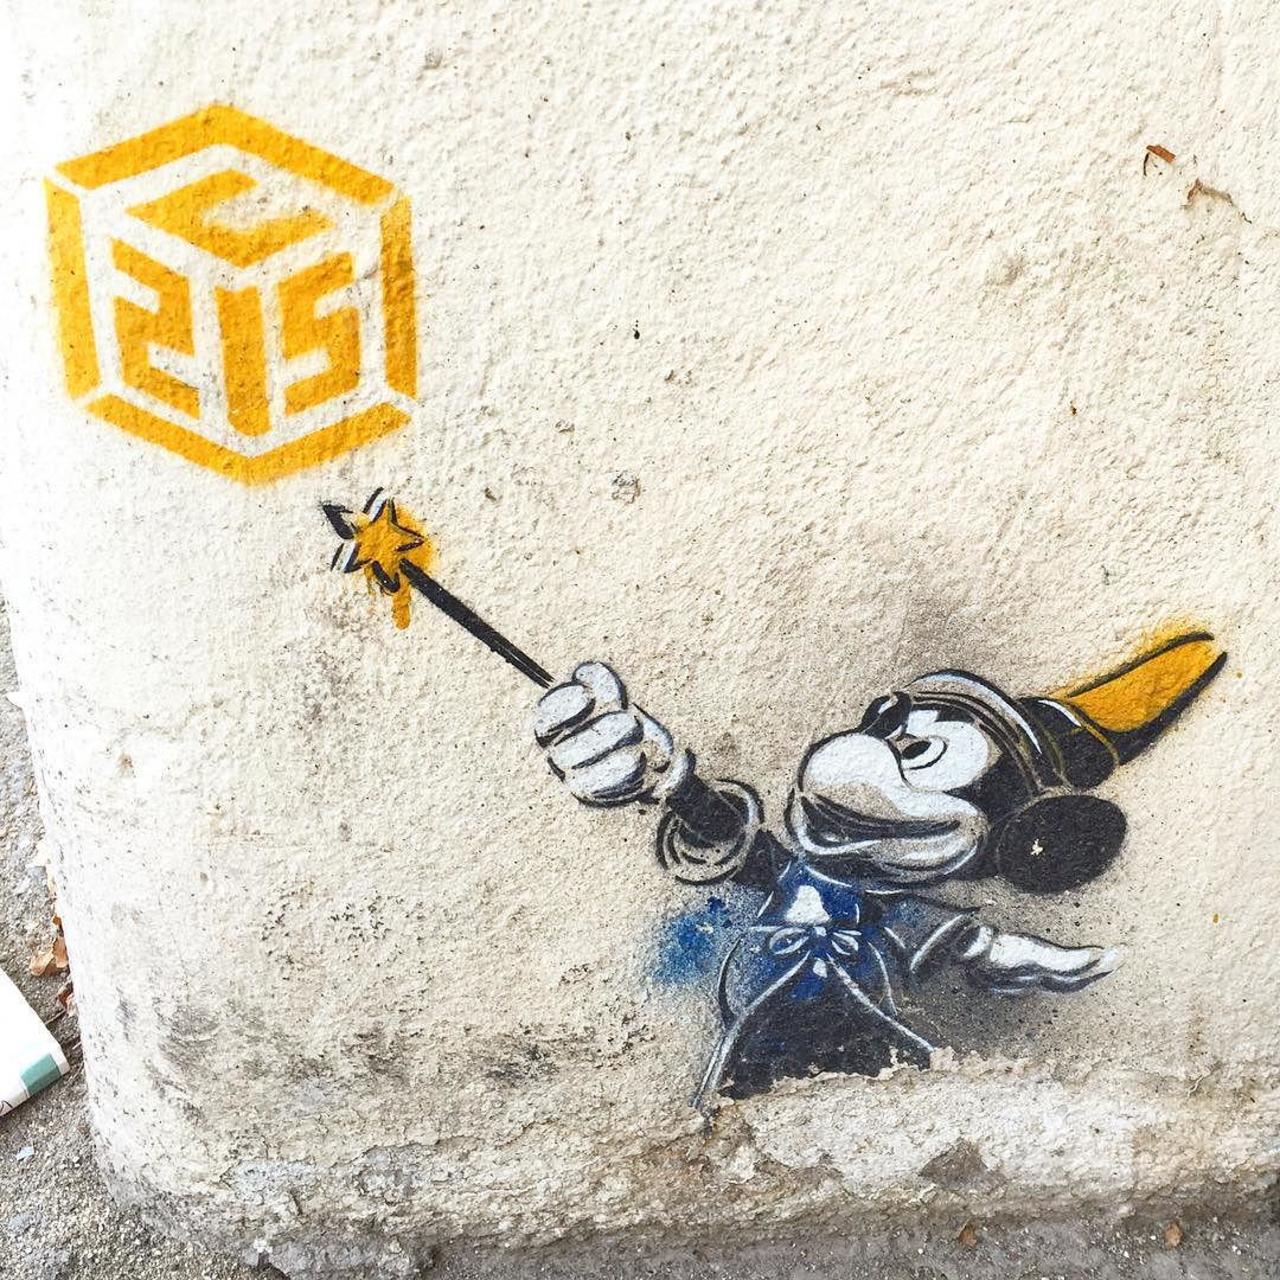 #Paris #graffiti photo by @jeanlucr http://ift.tt/1KZeyoH #StreetArt http://t.co/9ReWGjN58u